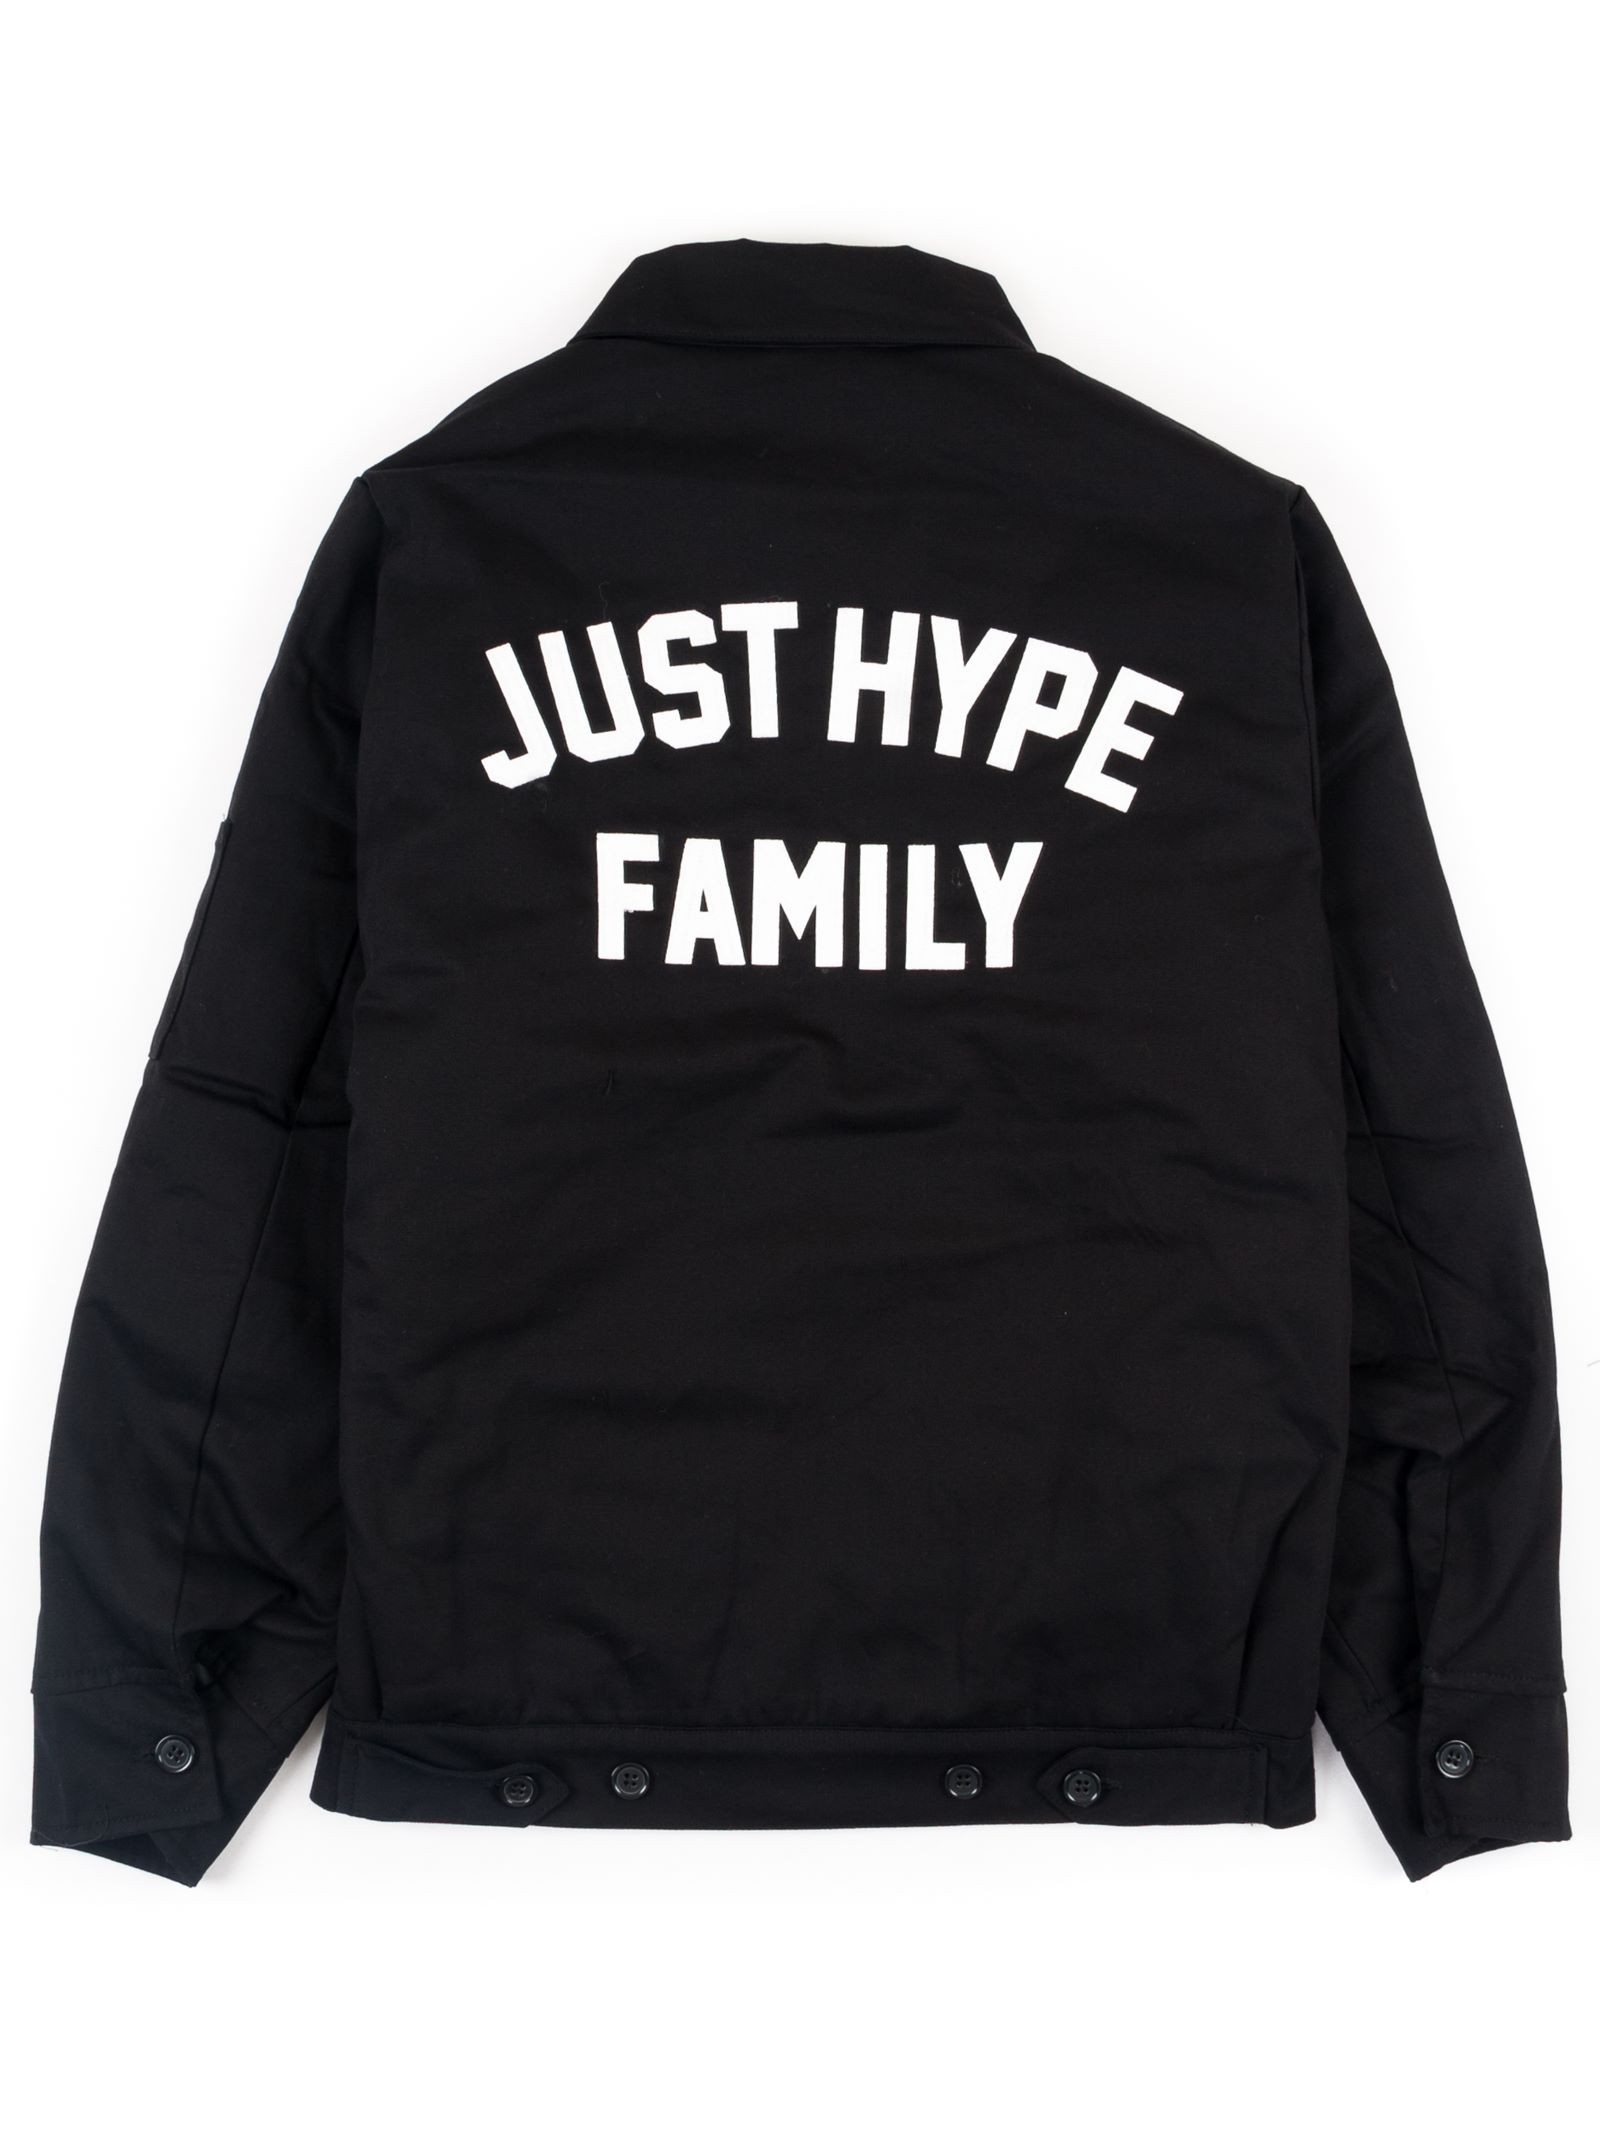 Hype Family Jacket | Dapper Street